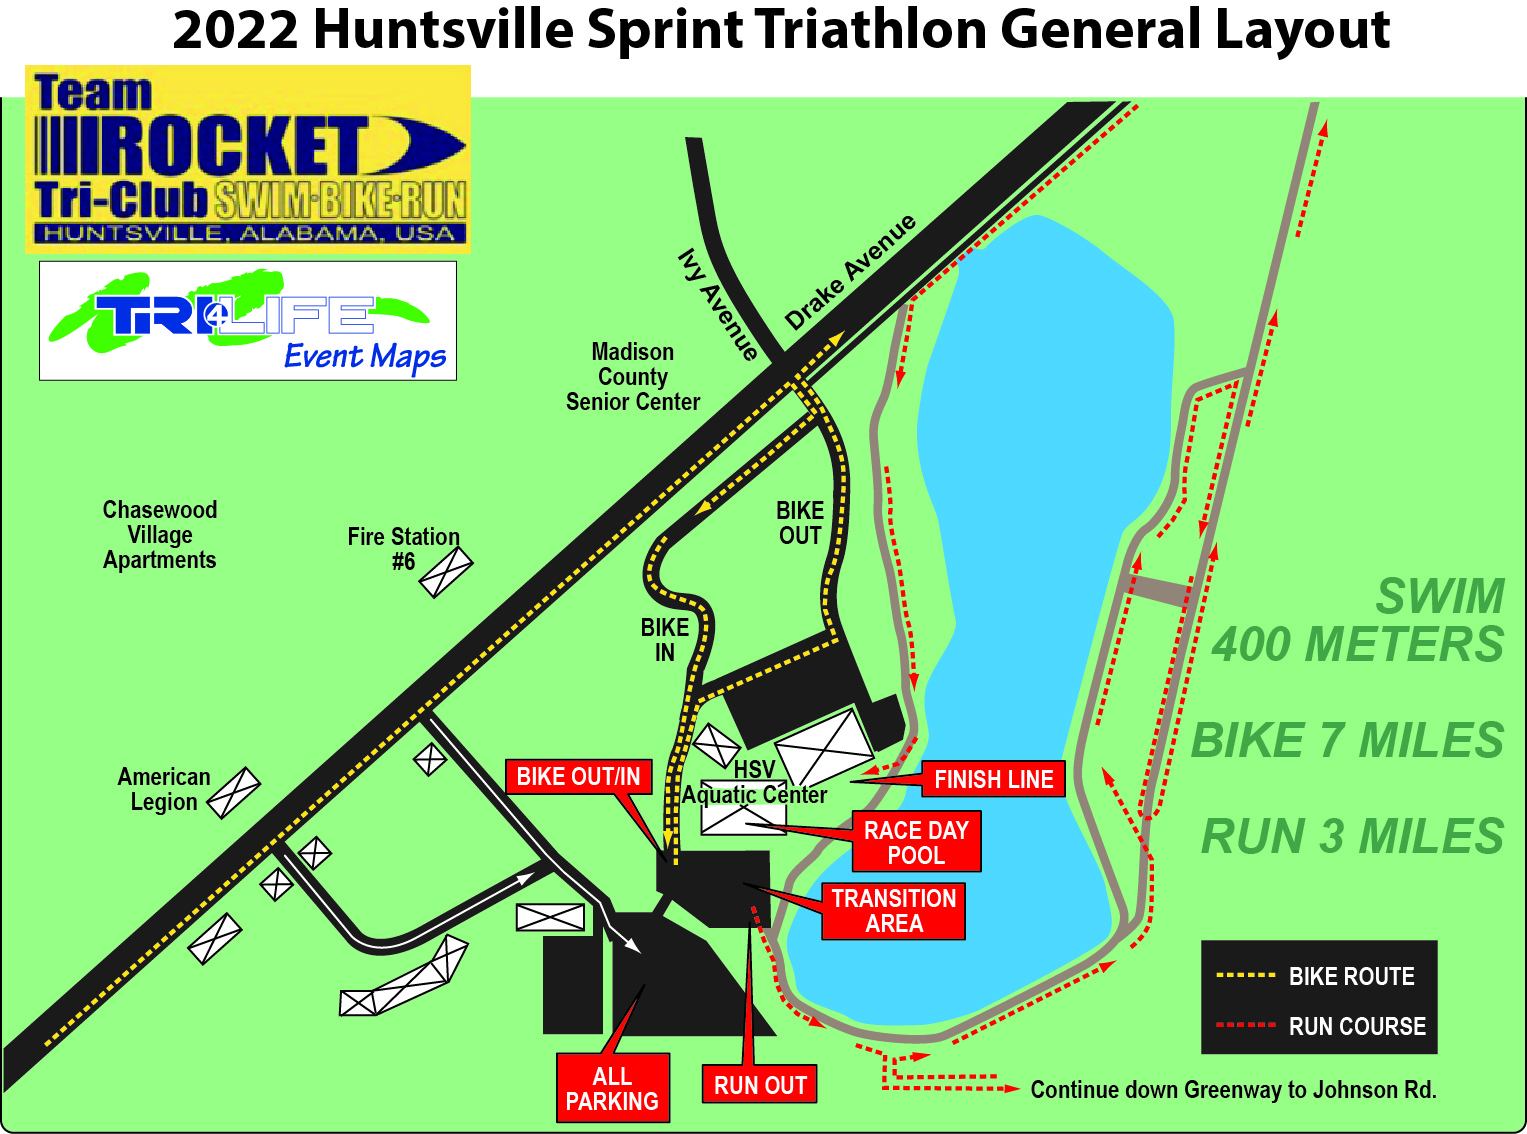 Huntsville Sprint Triathlon Team Rocket Tri Club